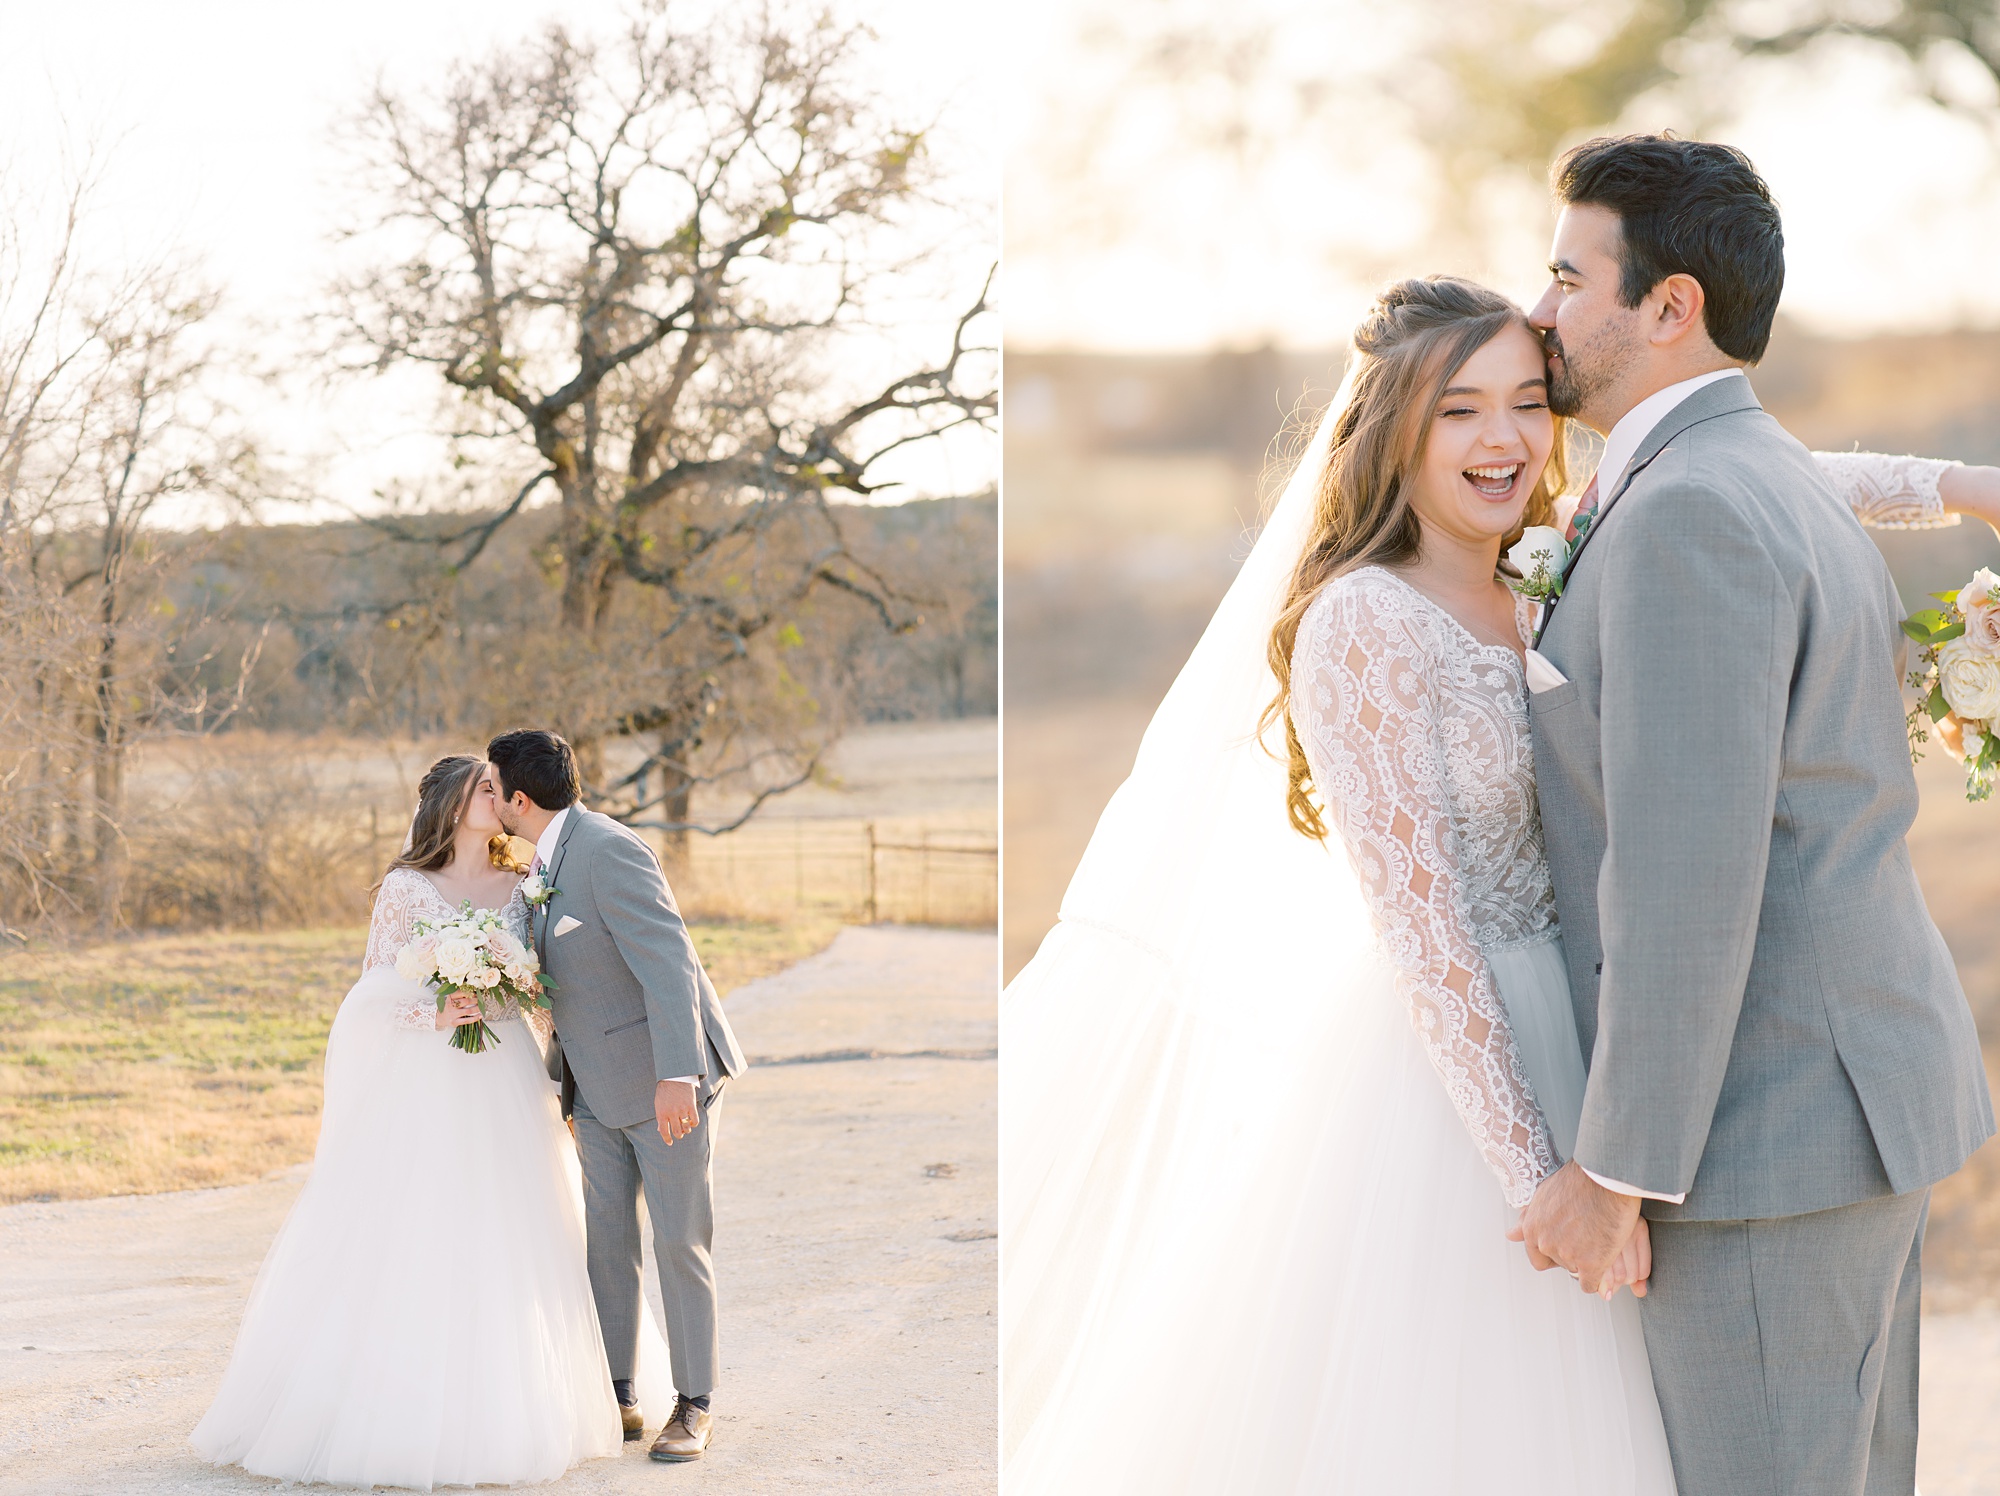 Austin TX couple kisses during sunset wedding photos 